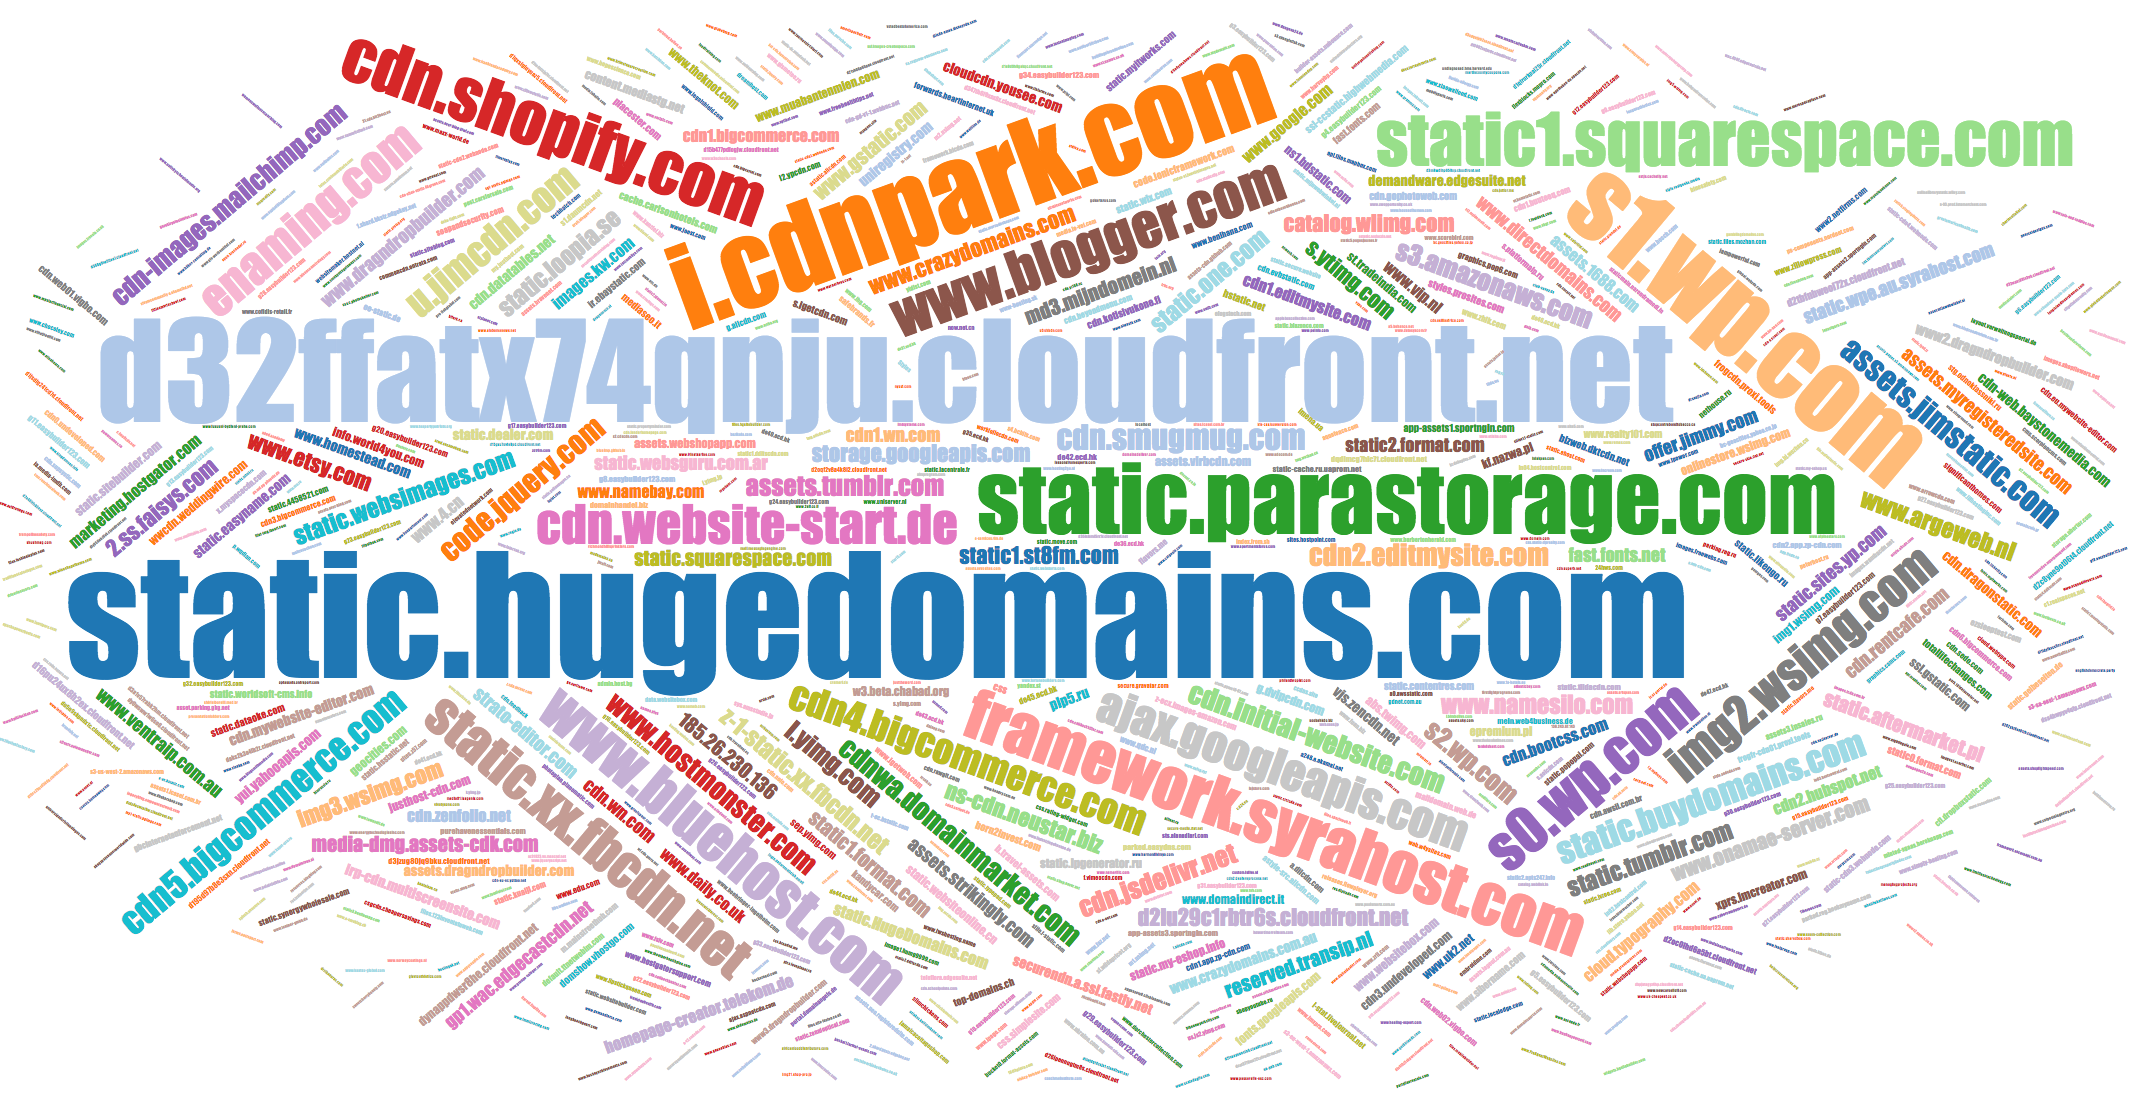 Popular names of CSS domains u.jimcdn.com, unpkg.com, etc.